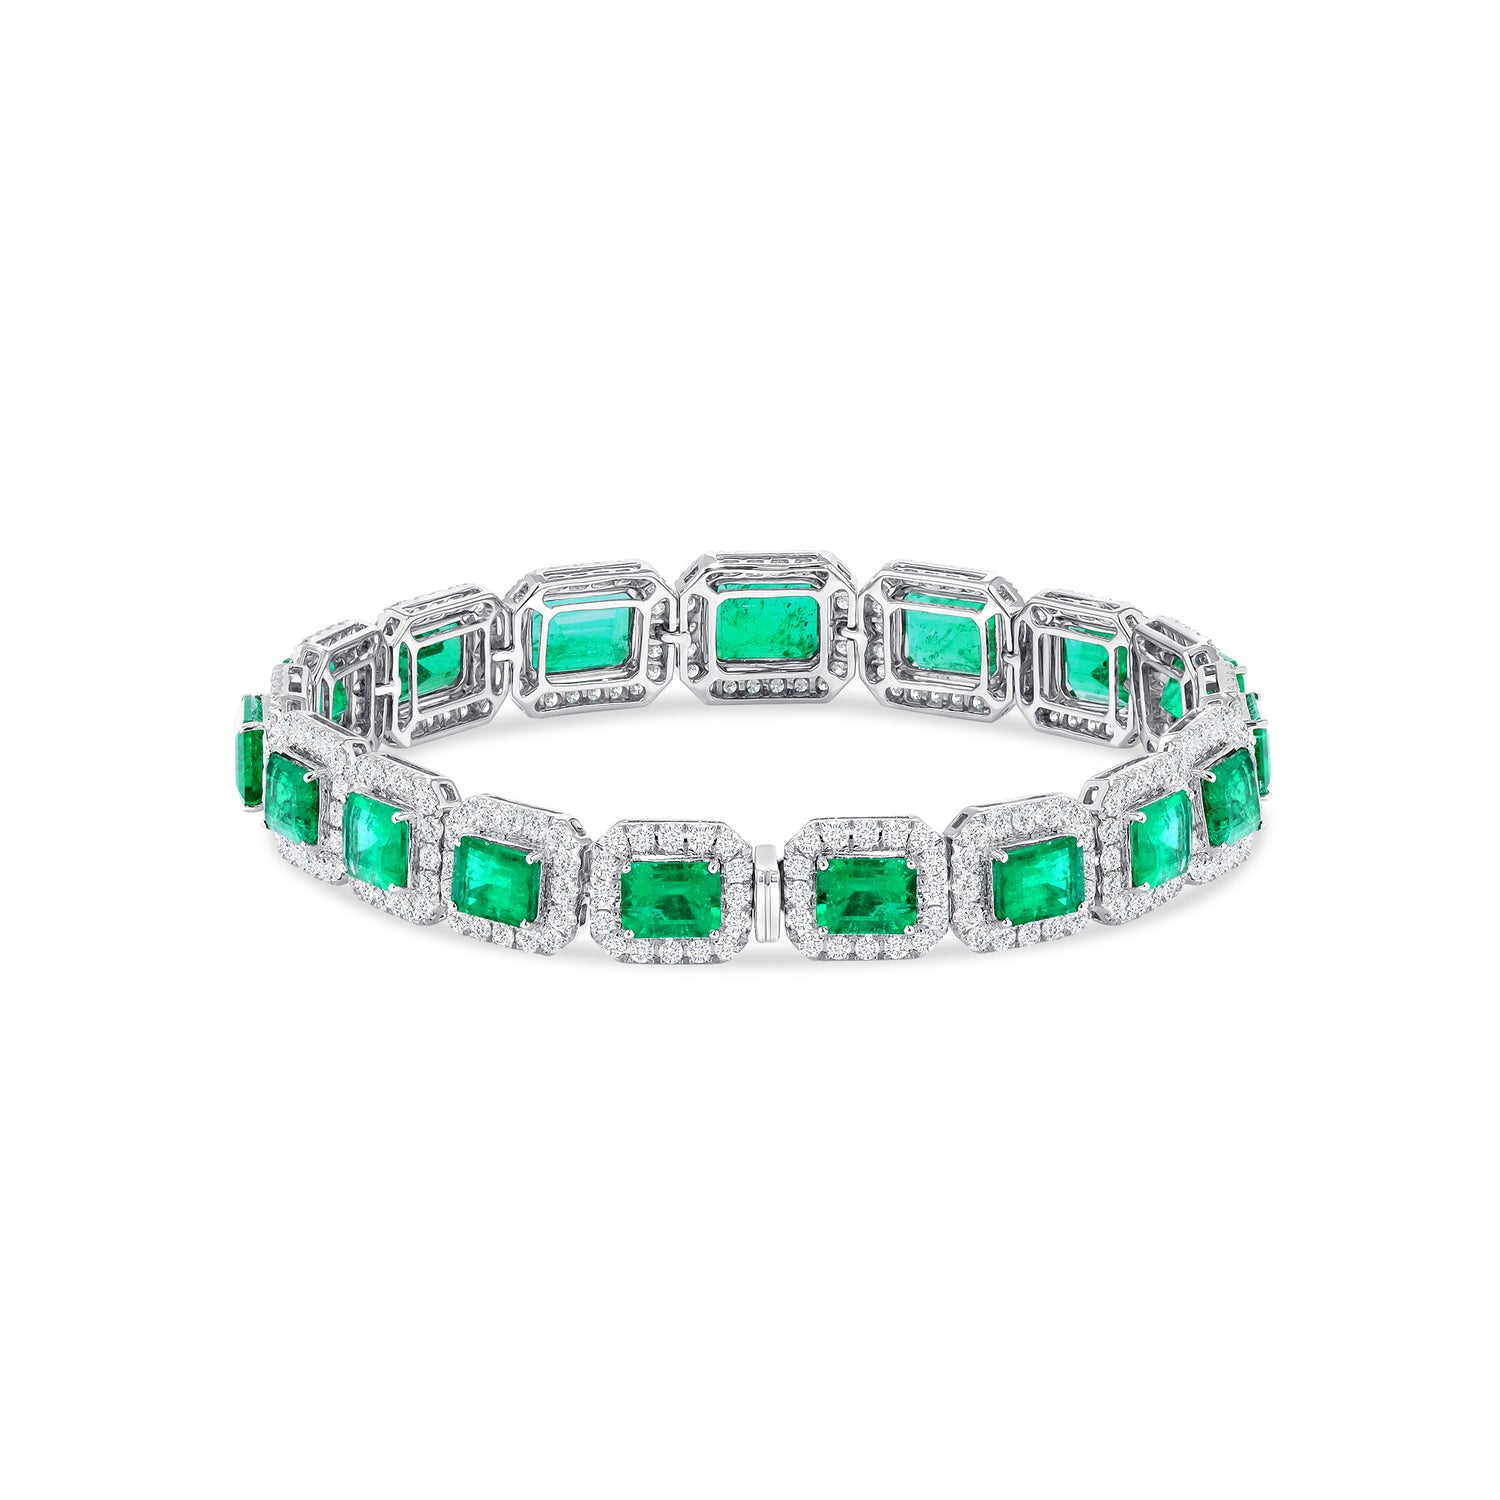 Emerald Cut Colombian Emerald and Diamond Melee Bracelet